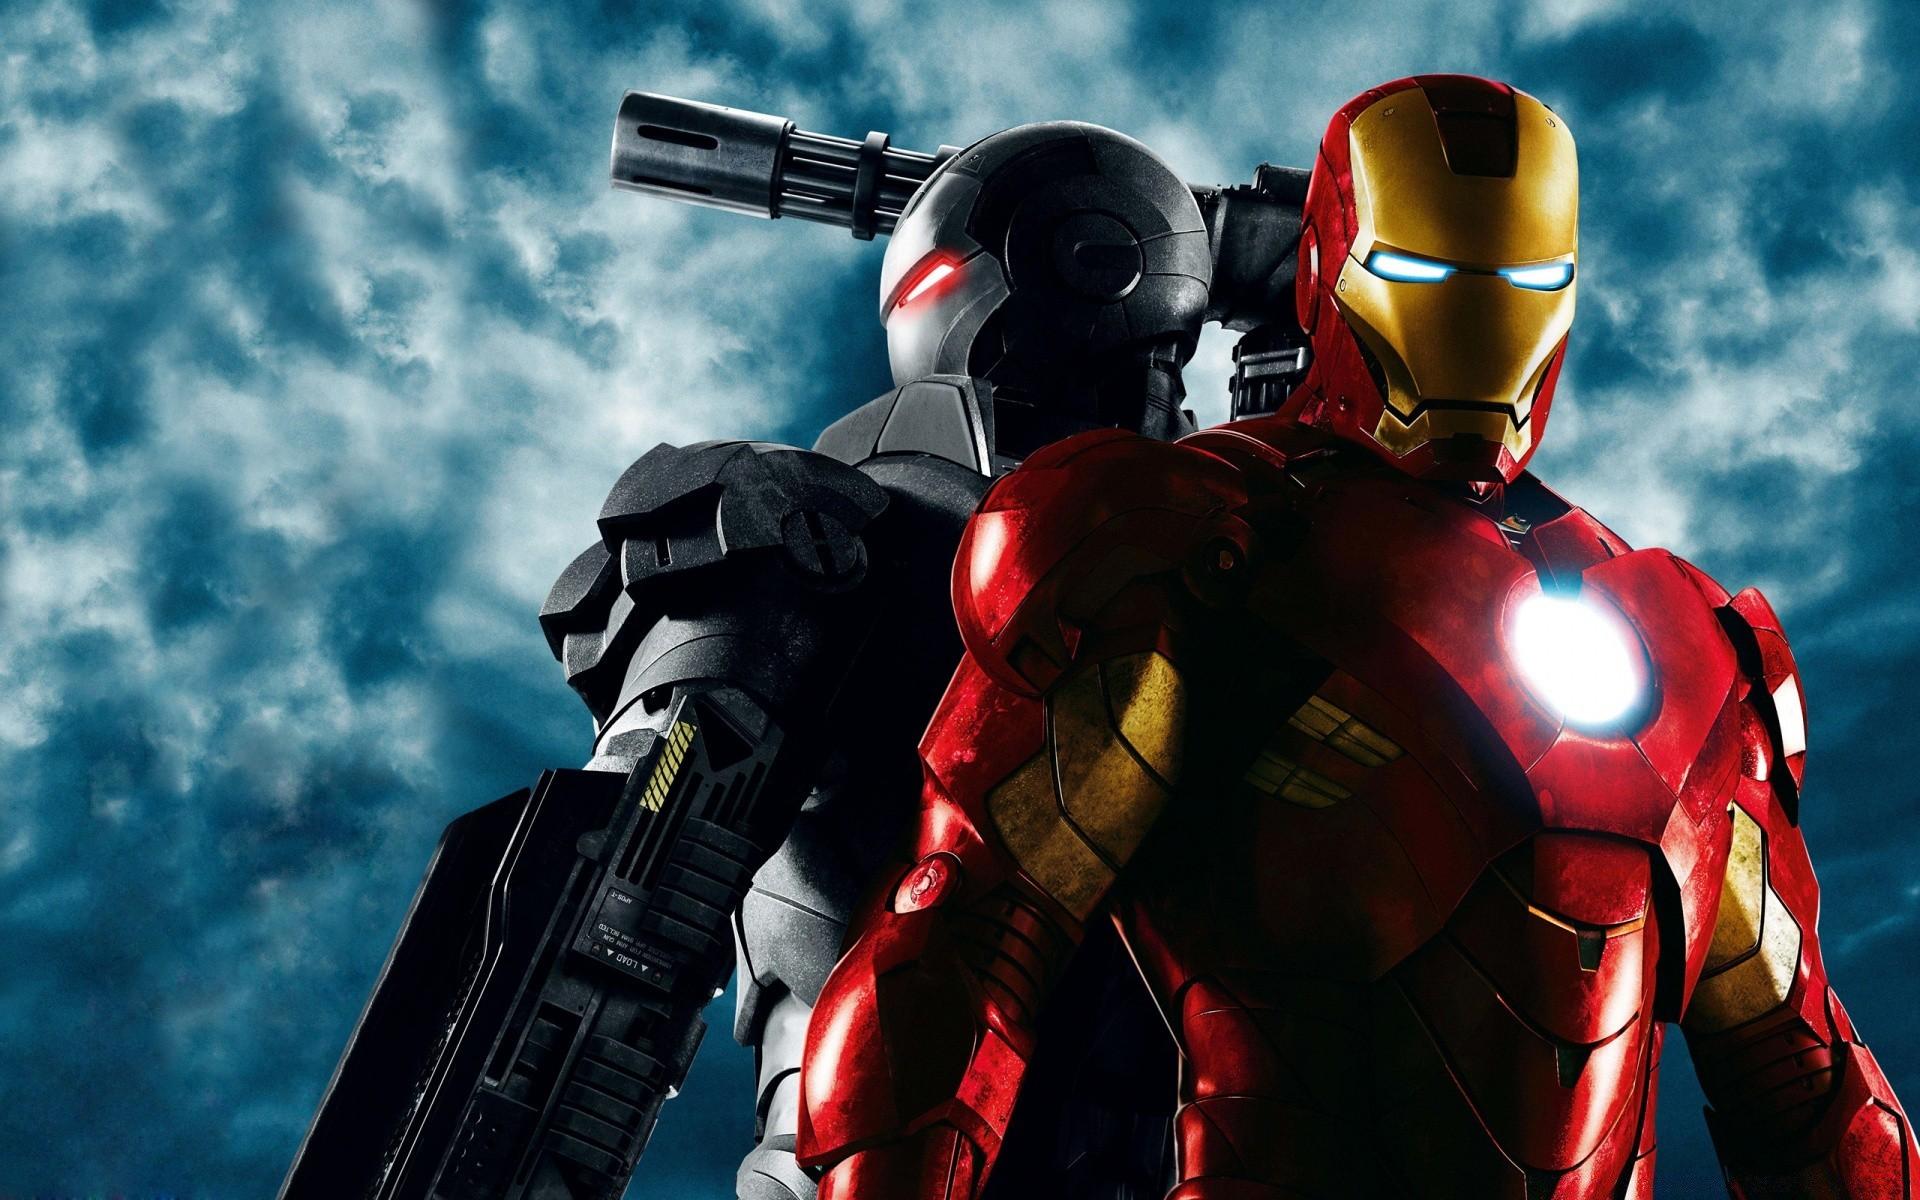 War Machine and Iron Man, Iron Man 2